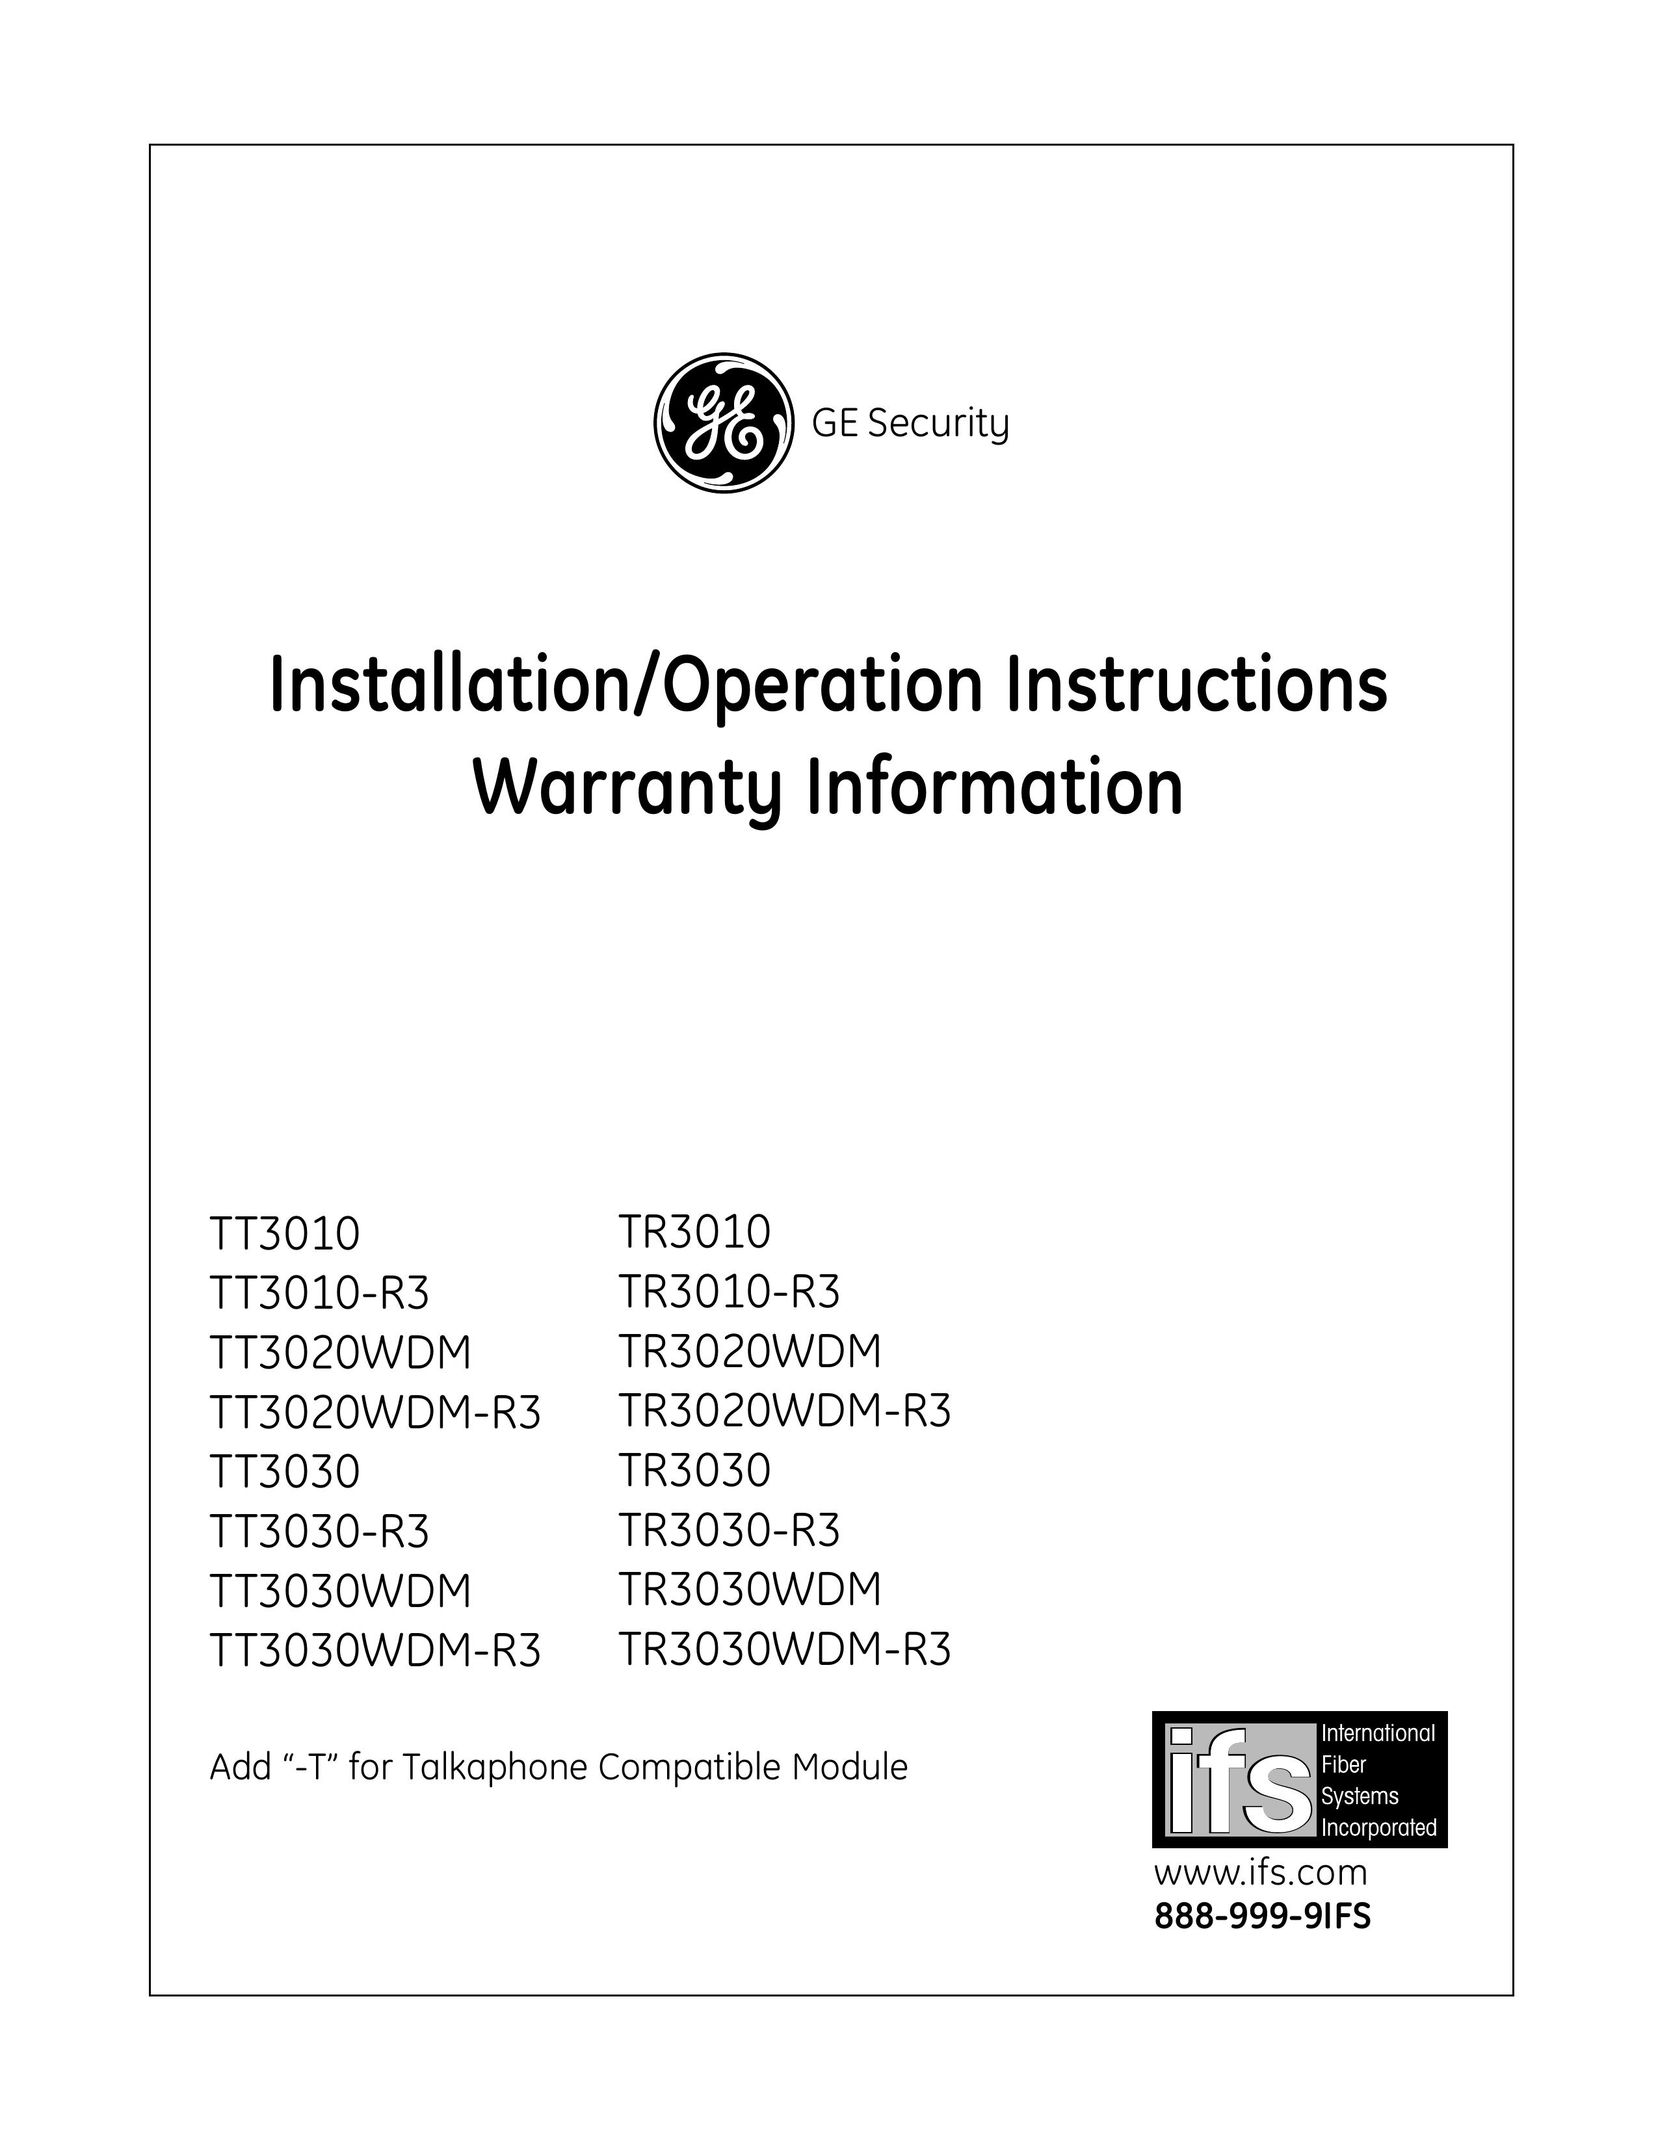 GE GE Security Telephone Accessories User Manual